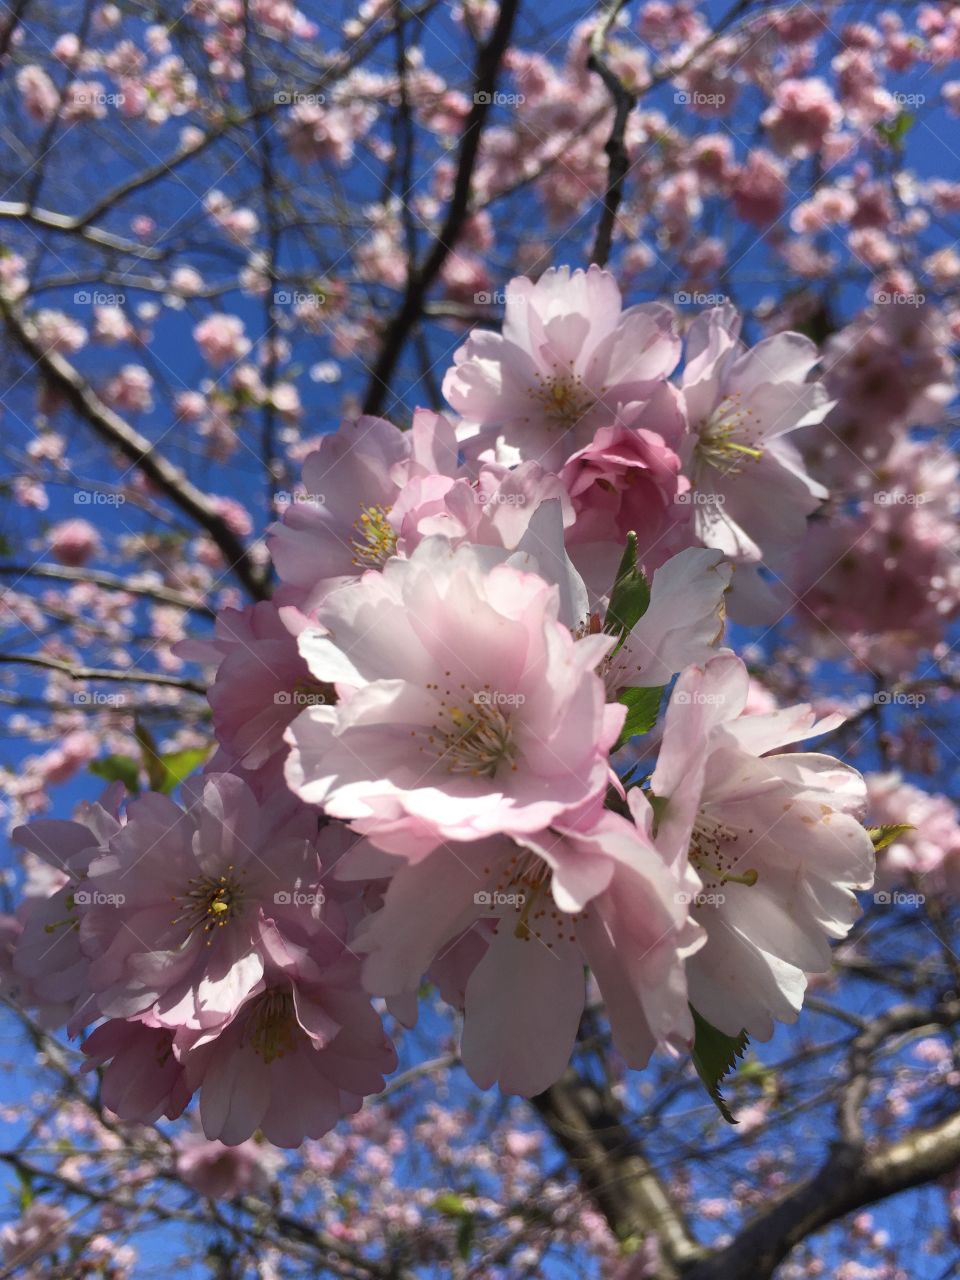 Spring time in my backyard 2015. Flower 